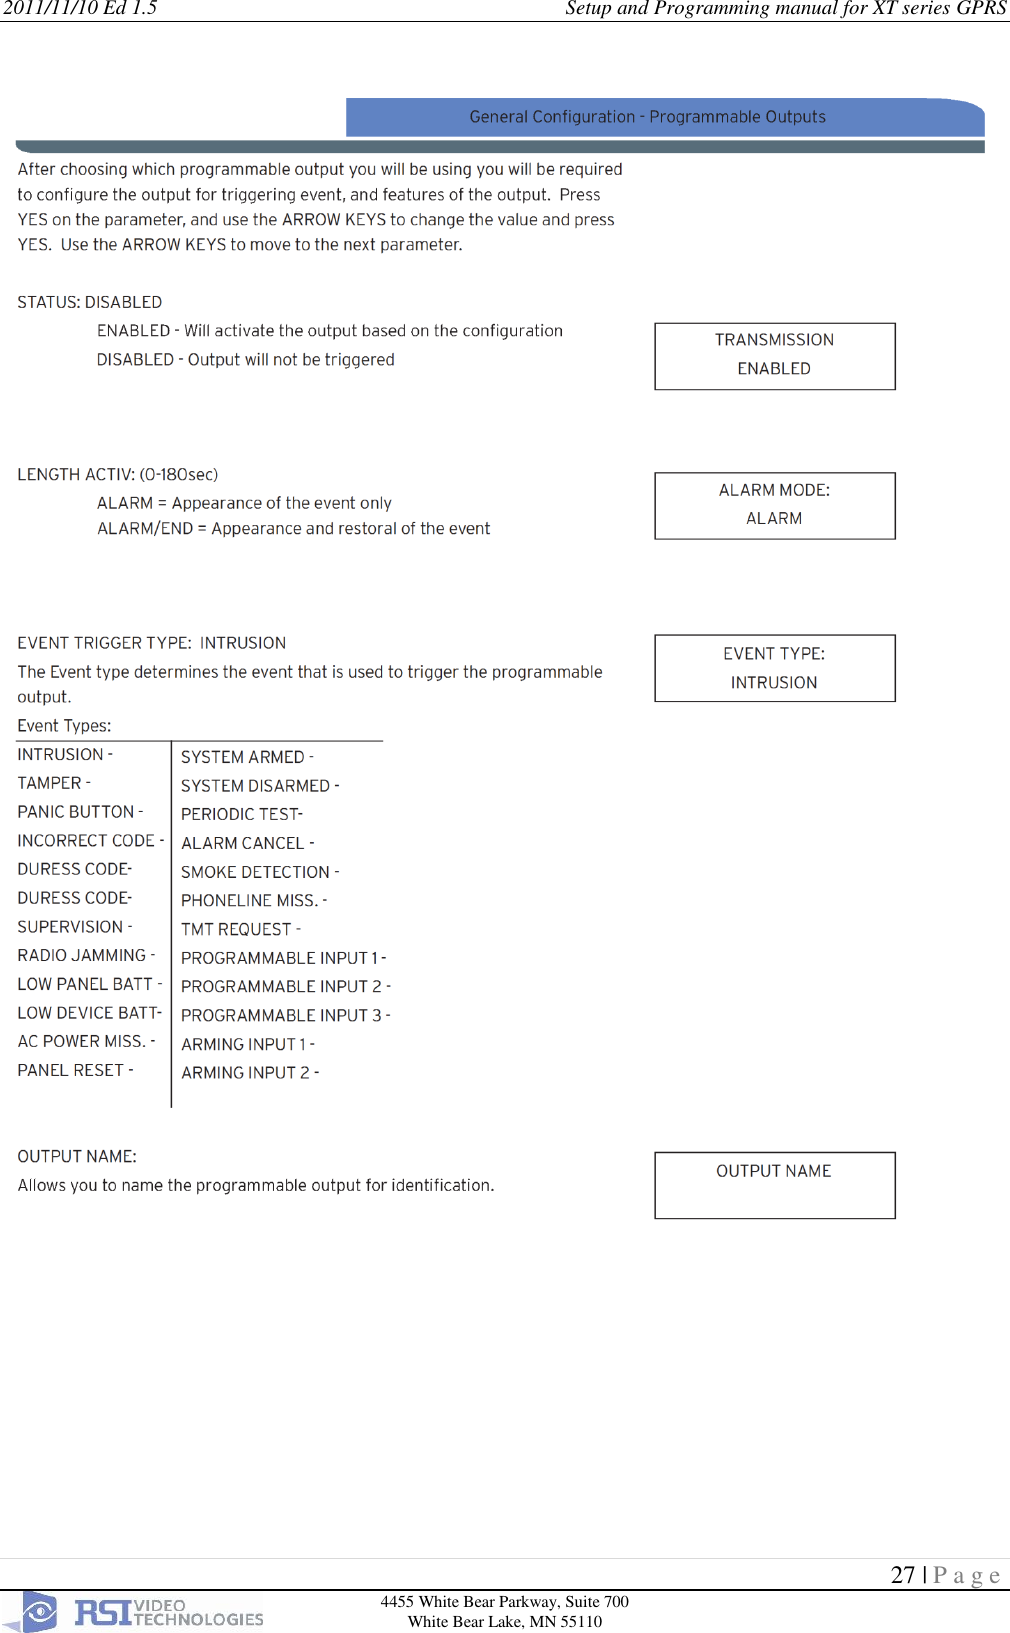 2011/11/10 Ed 1.5      Setup and Programming manual for XT series GPRS  27 | P a g e  4455 White Bear Parkway, Suite 700 White Bear Lake, MN 55110  